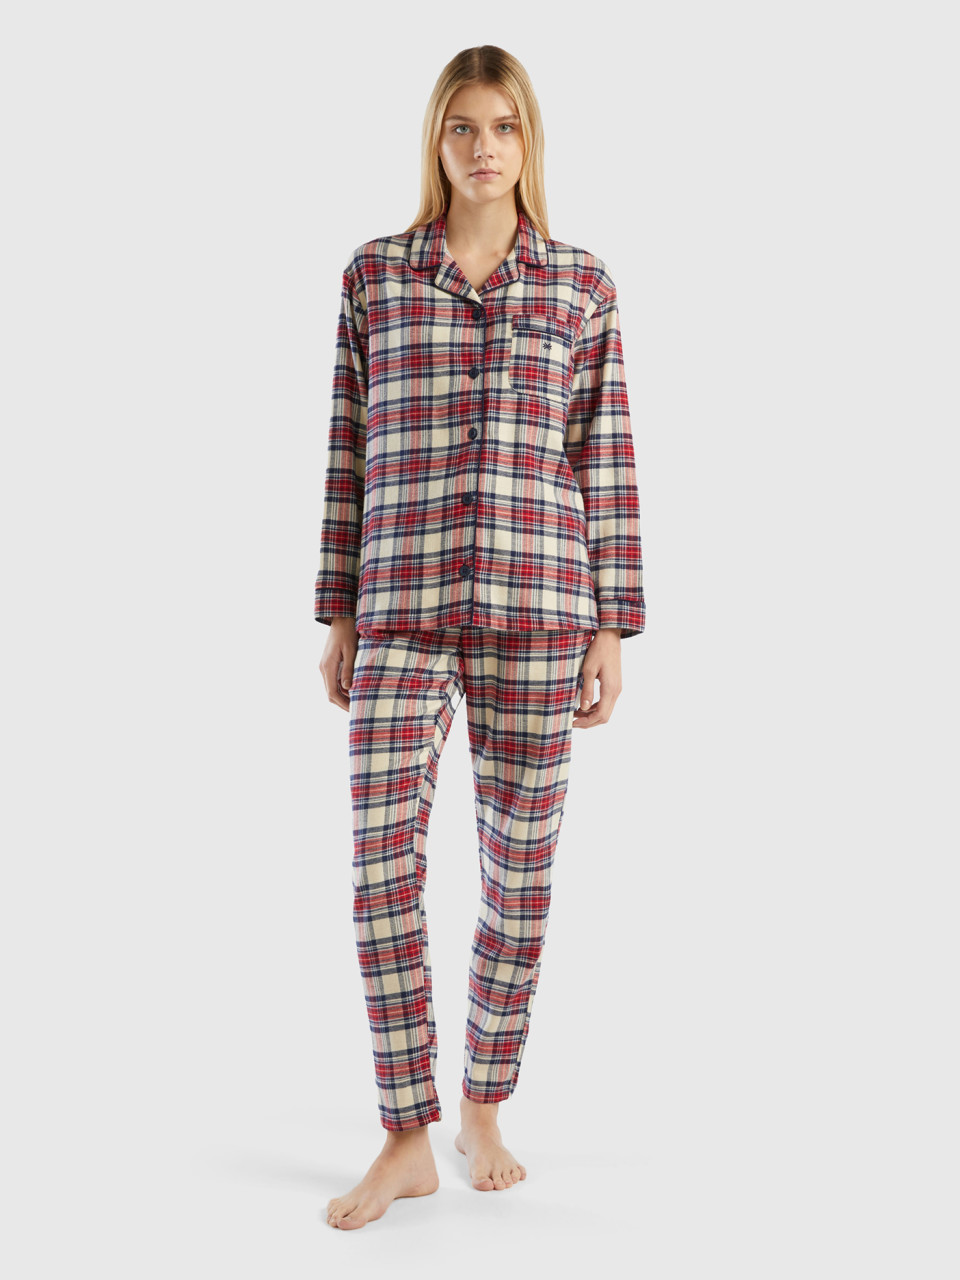 Benetton, Flannel Tartan Pyjamas, Multi-color, Women